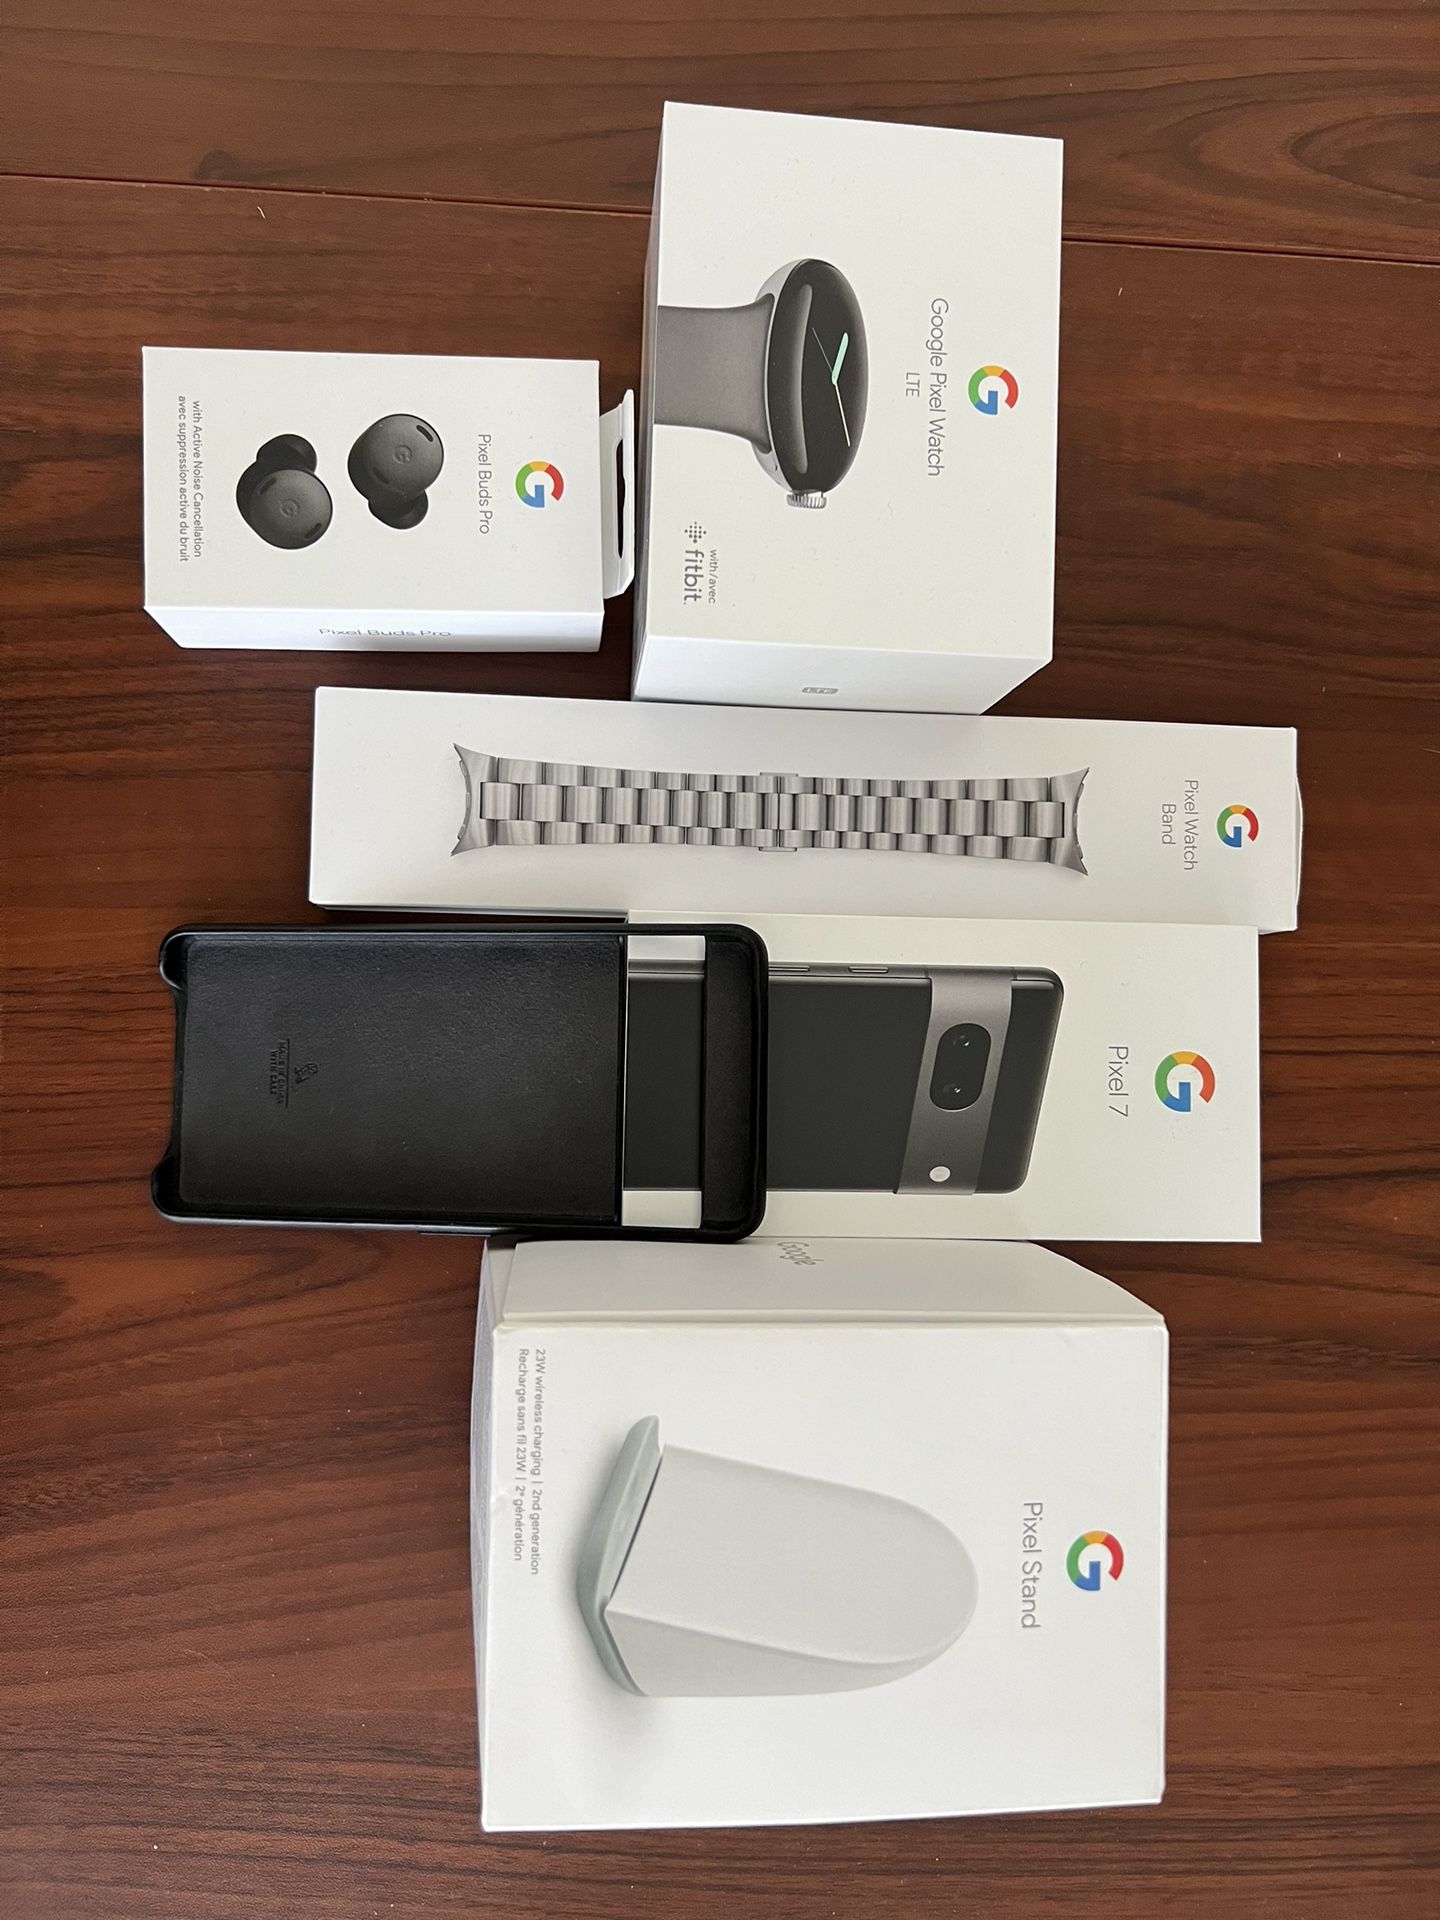 Complete Google Pixel Set-Up